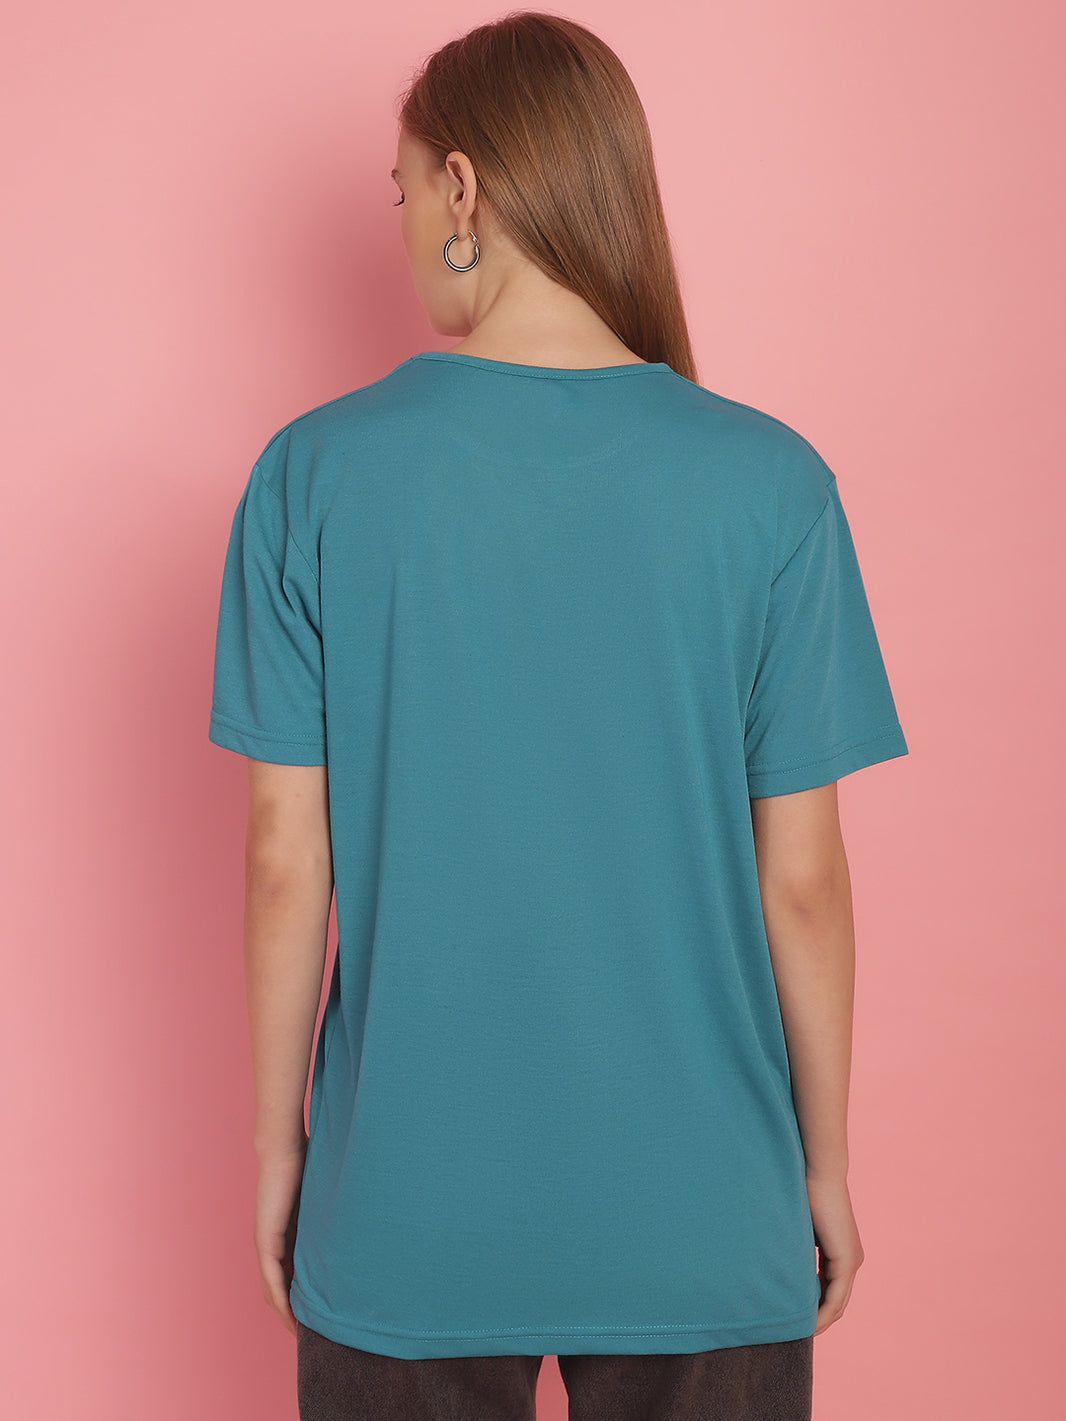 Vimal Jonney Round Neck Cotton Solid Ferozi T-Shirt for Women